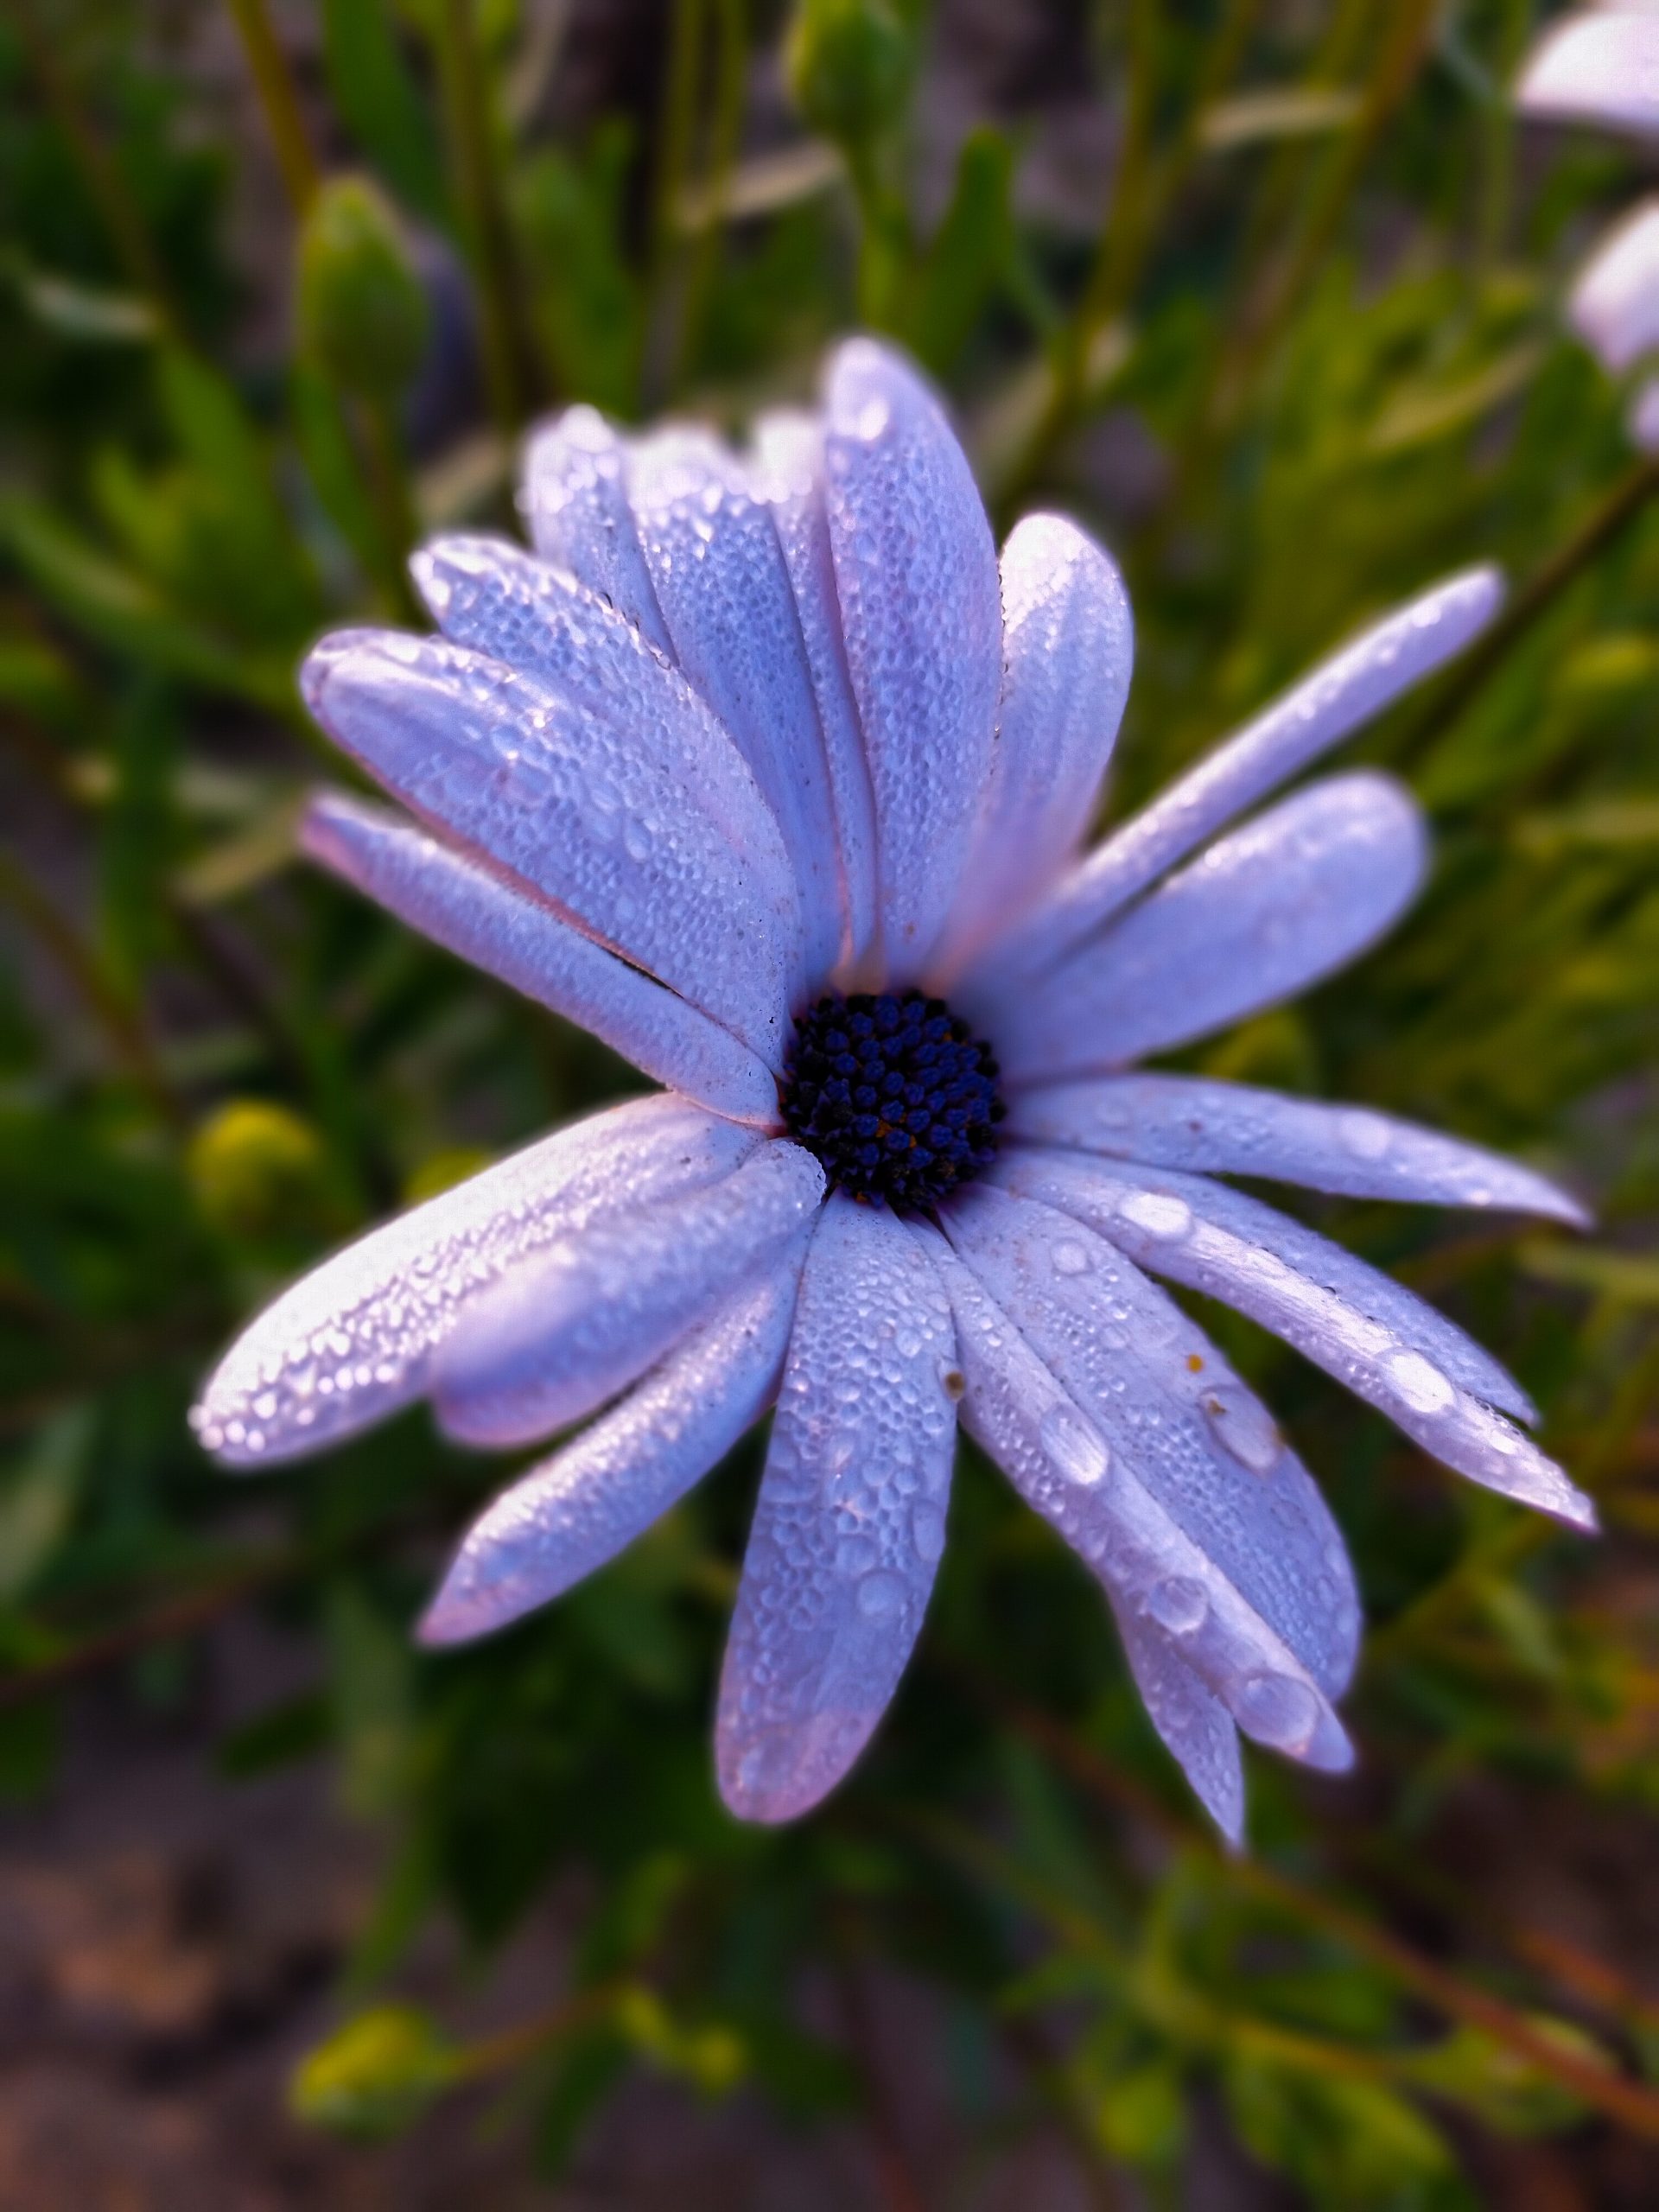 Dew on Daisy flower